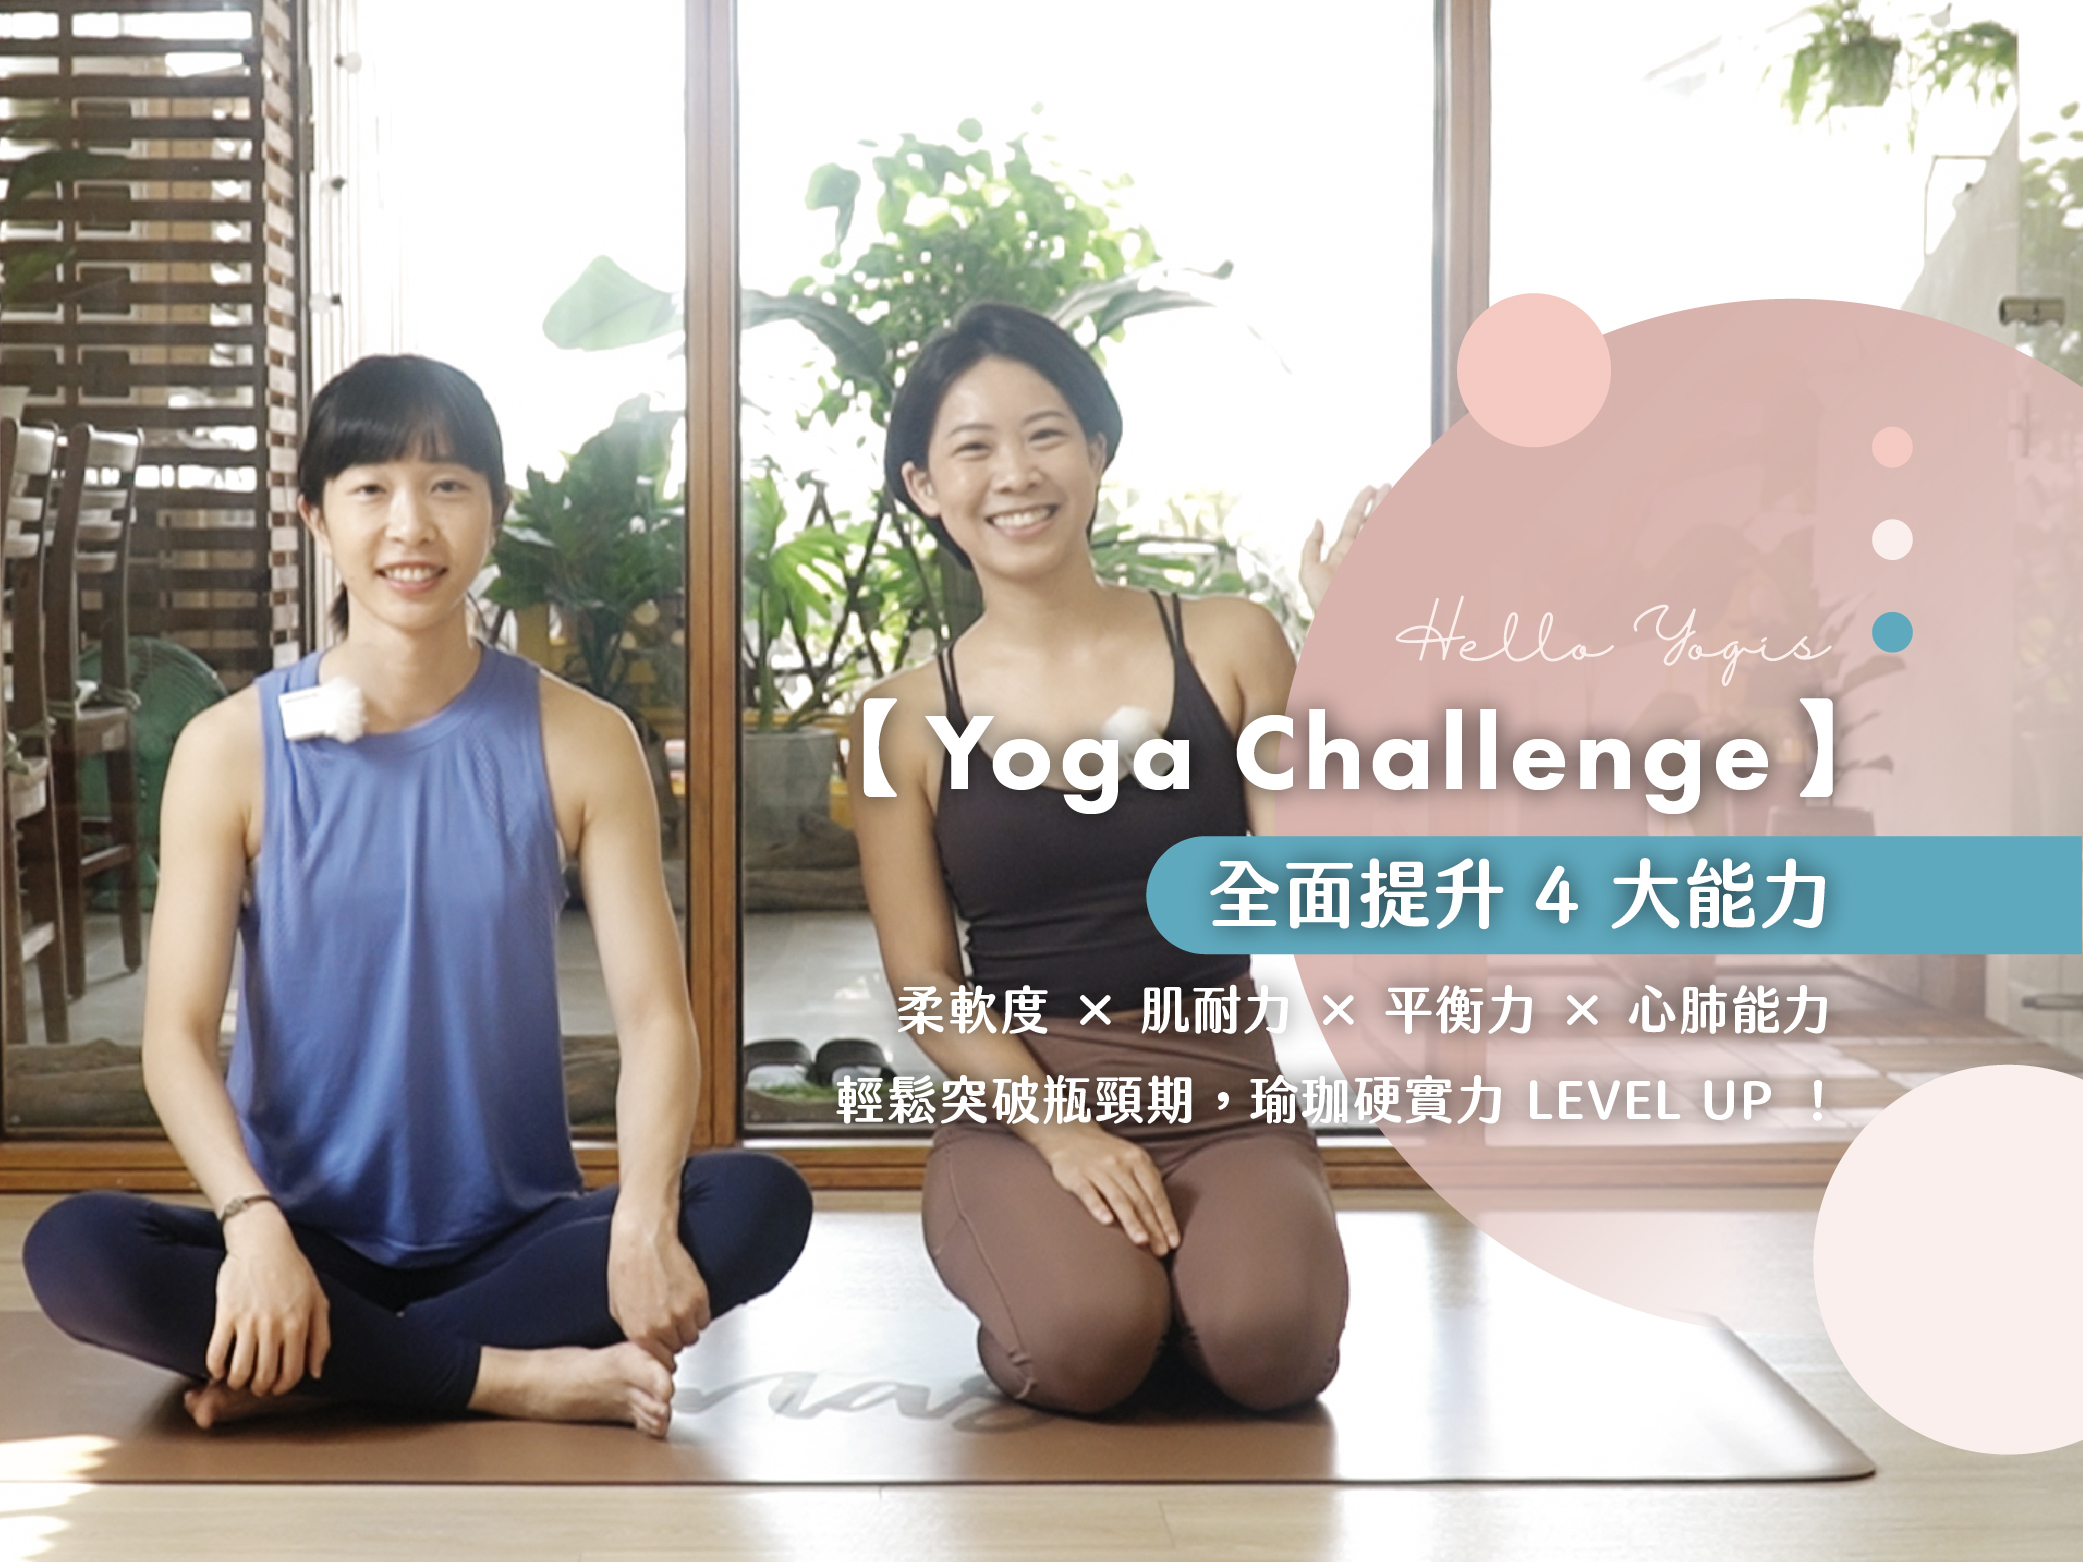 56 Yoga Challenge 瑜珈瓶頸,瑜珈挑戰,瑜珈硬實力,瑜珈瓶頸期,柔軟度,肌耐力,平衡感,心肺能力,提升柔軟度,提升瑜珈實力,Yoga Challenge